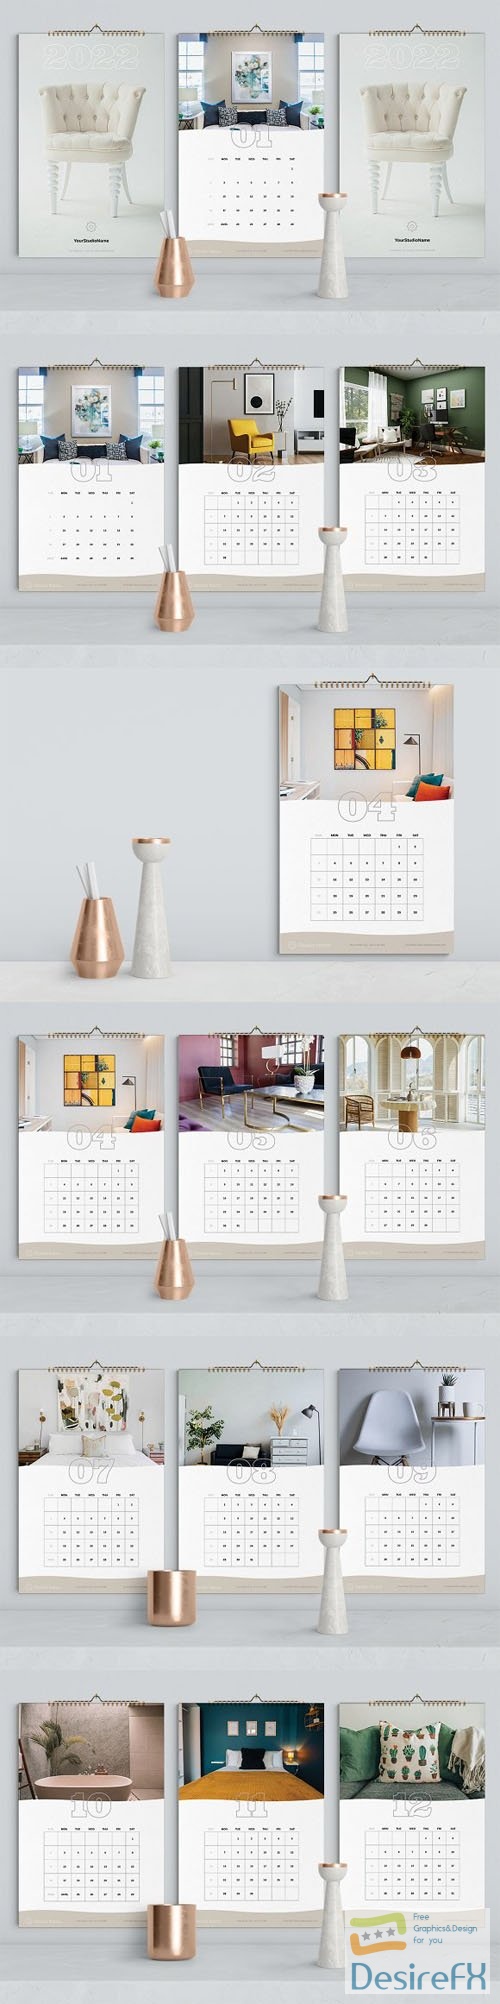 Interior Design - Wall Calendar 2022 InDesign Template